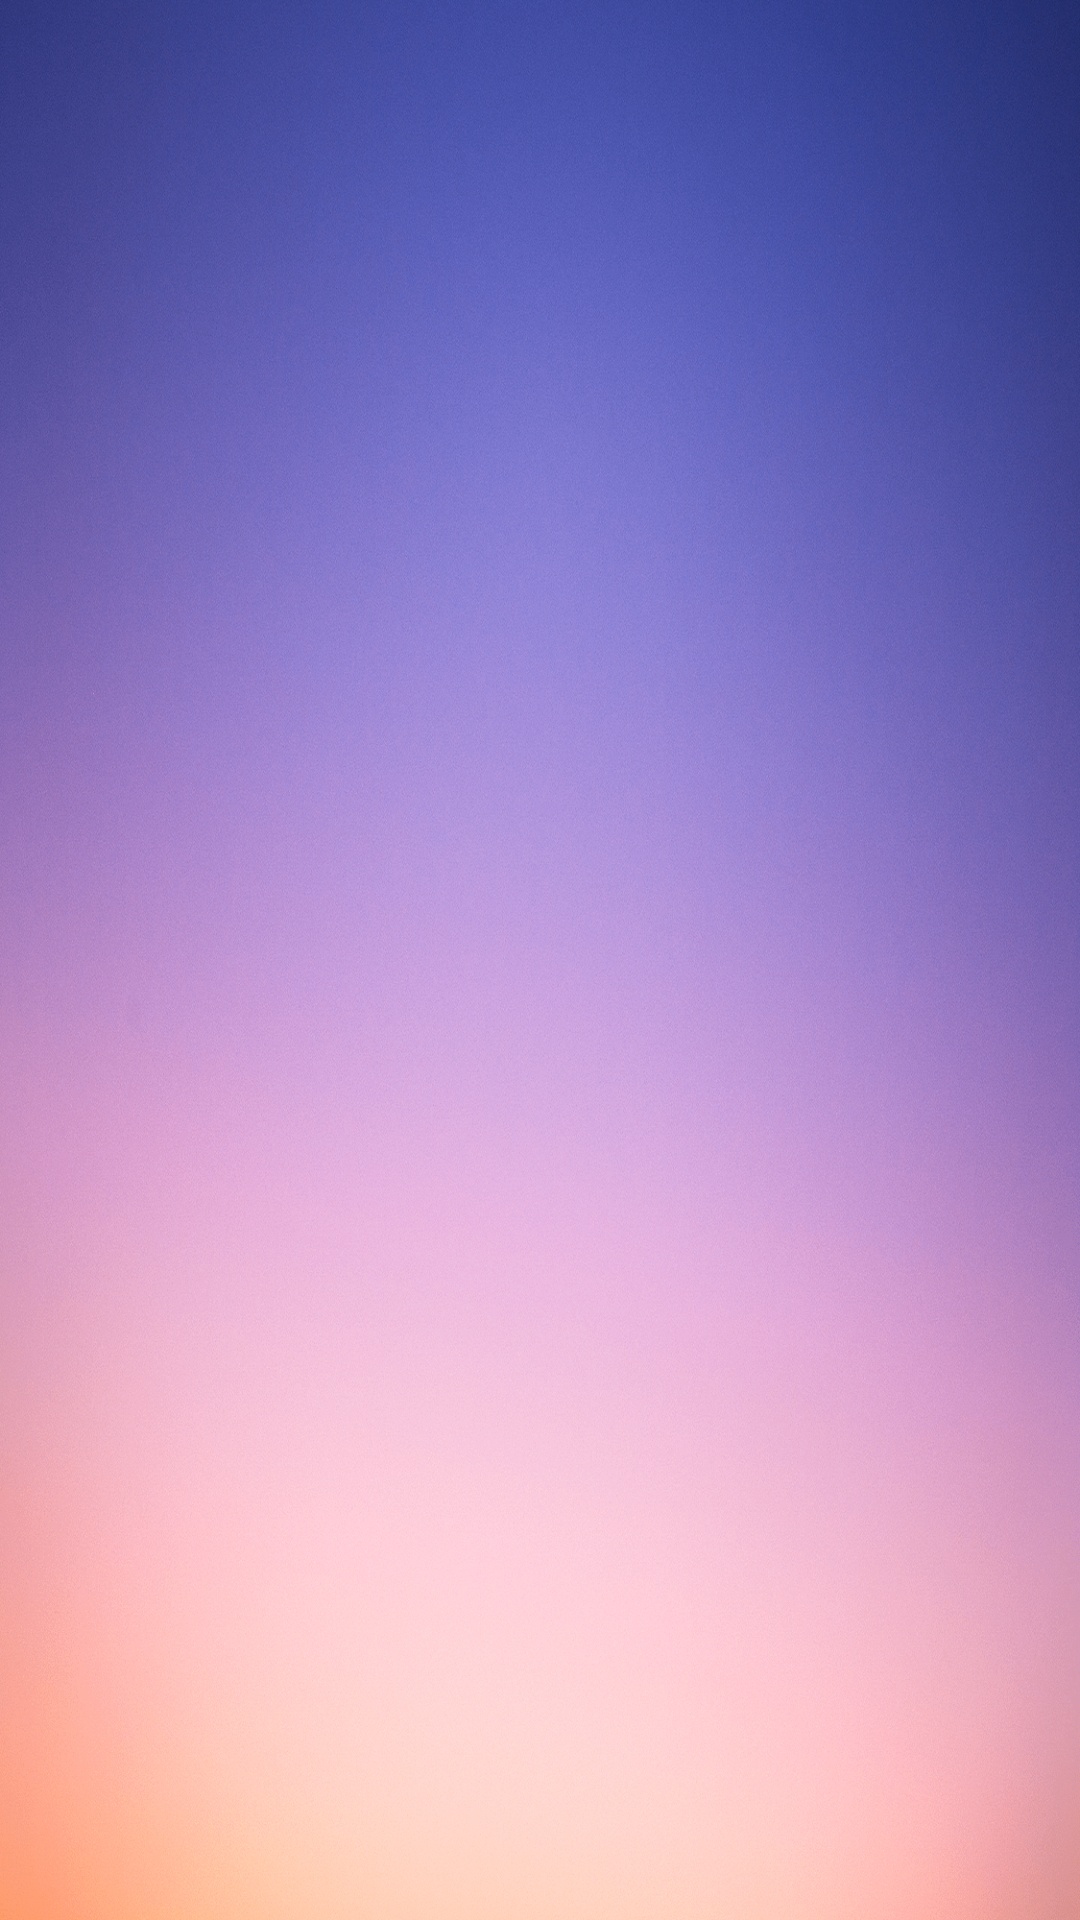 Apple, IOS 12, IOS, Purple, Violette. Wallpaper in 1080x1920 Resolution